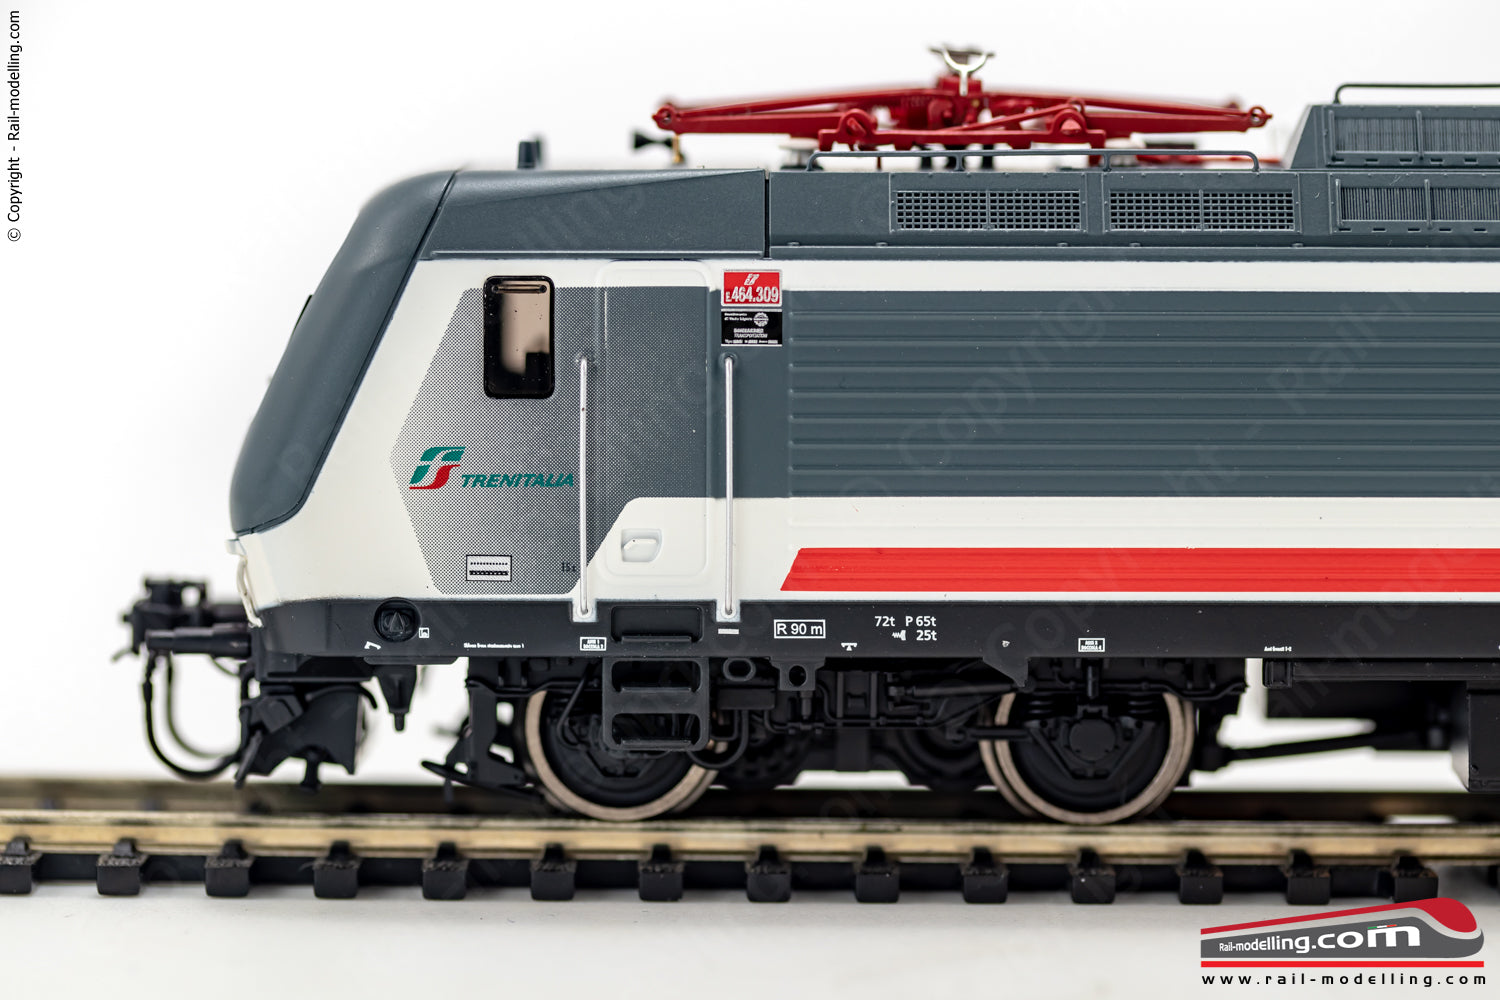 LIMA EXPERT HL2665 - H0 1:87 - Locomotiva elettrica FS Trenitalia E.464 309 livrea Intercity Ep. VI